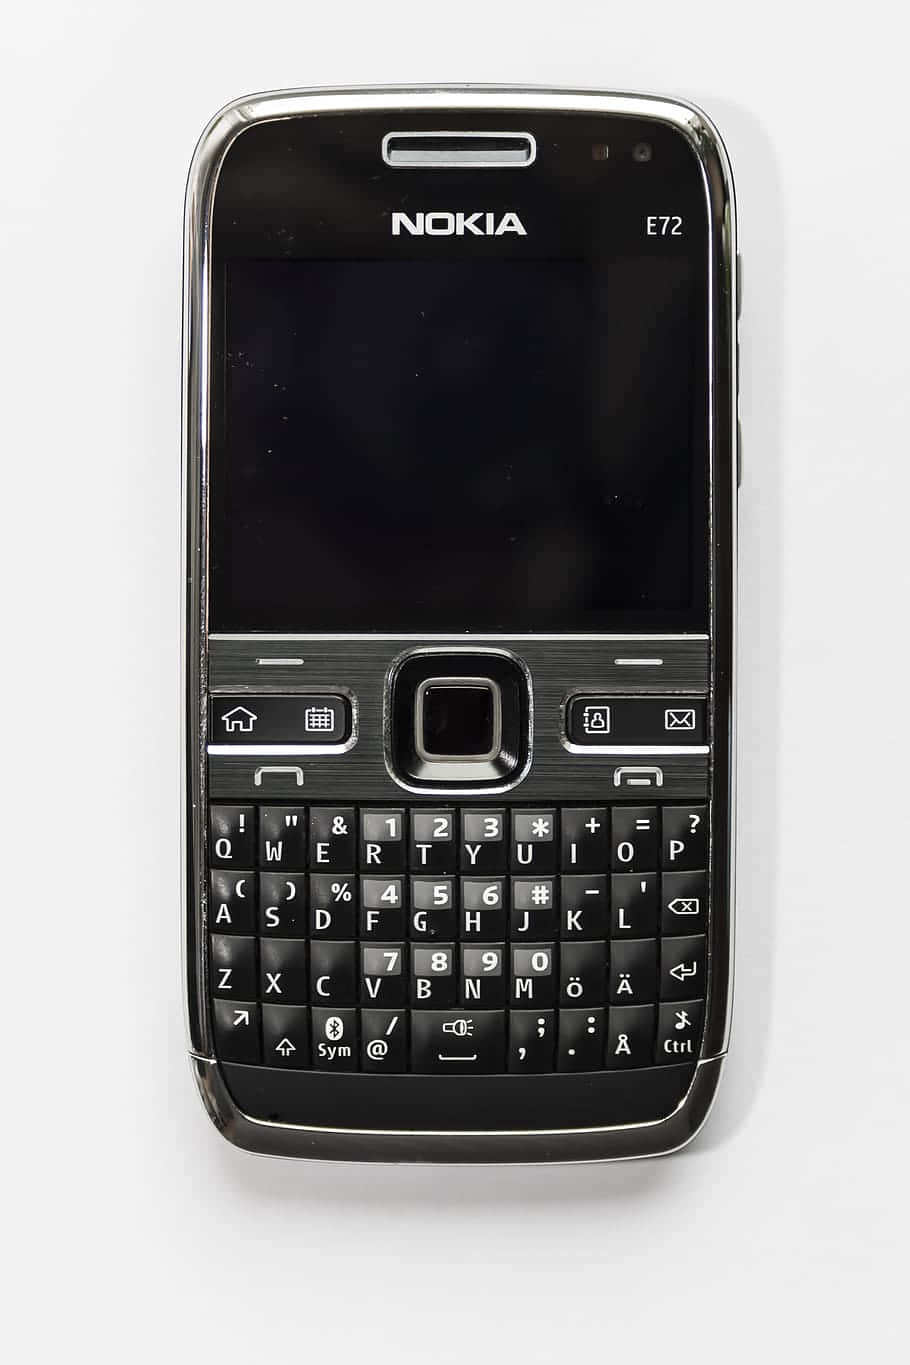 Maravilhososmartphone Nokia 910